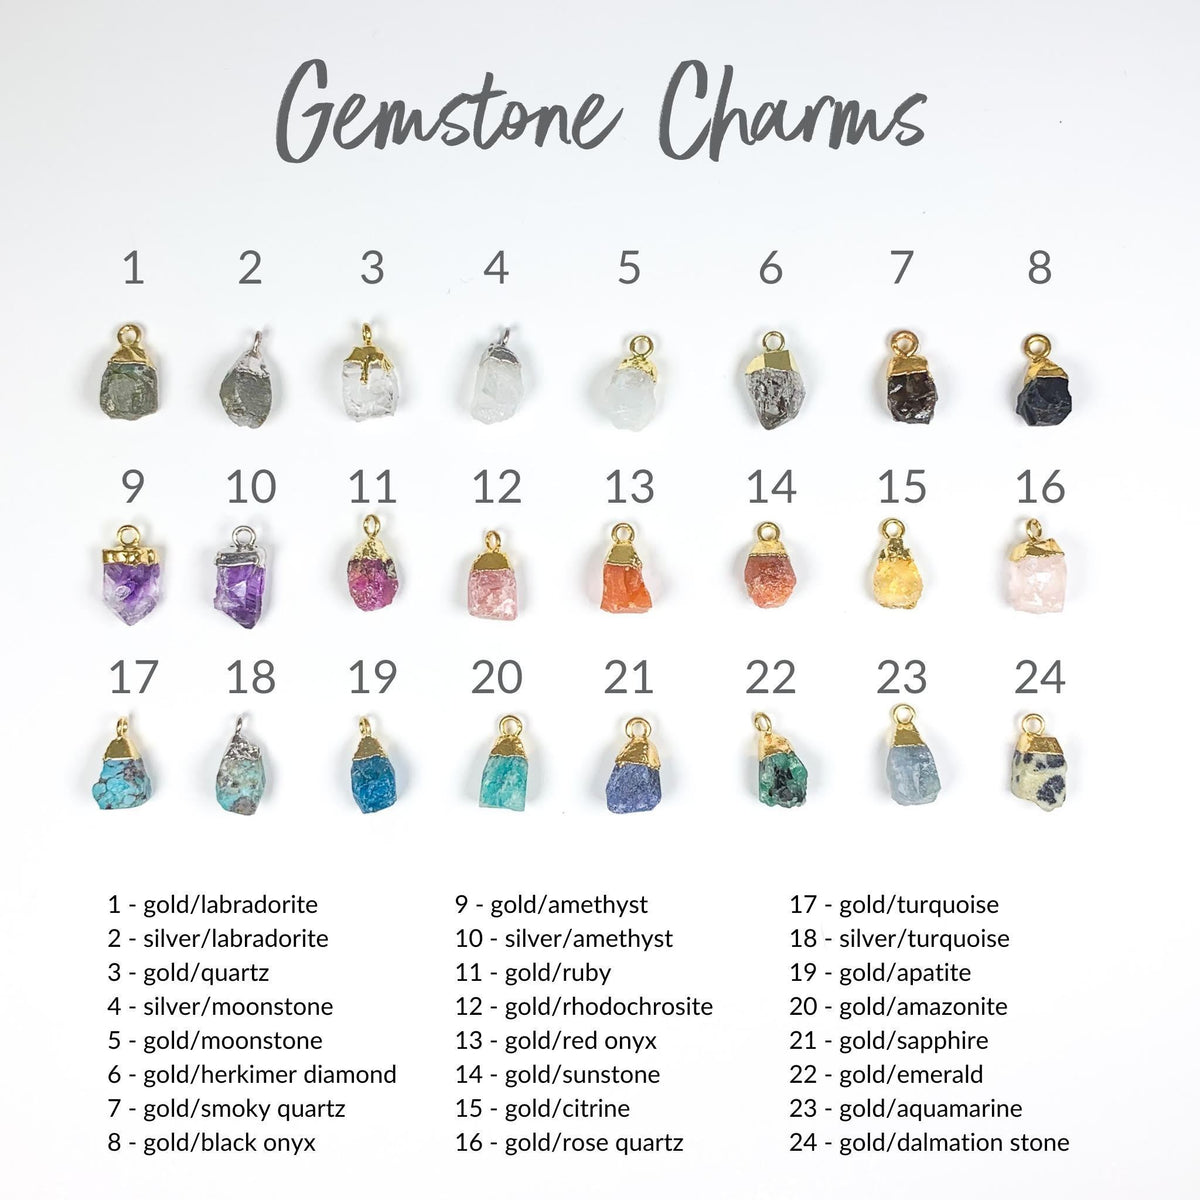 Gemstone Charms